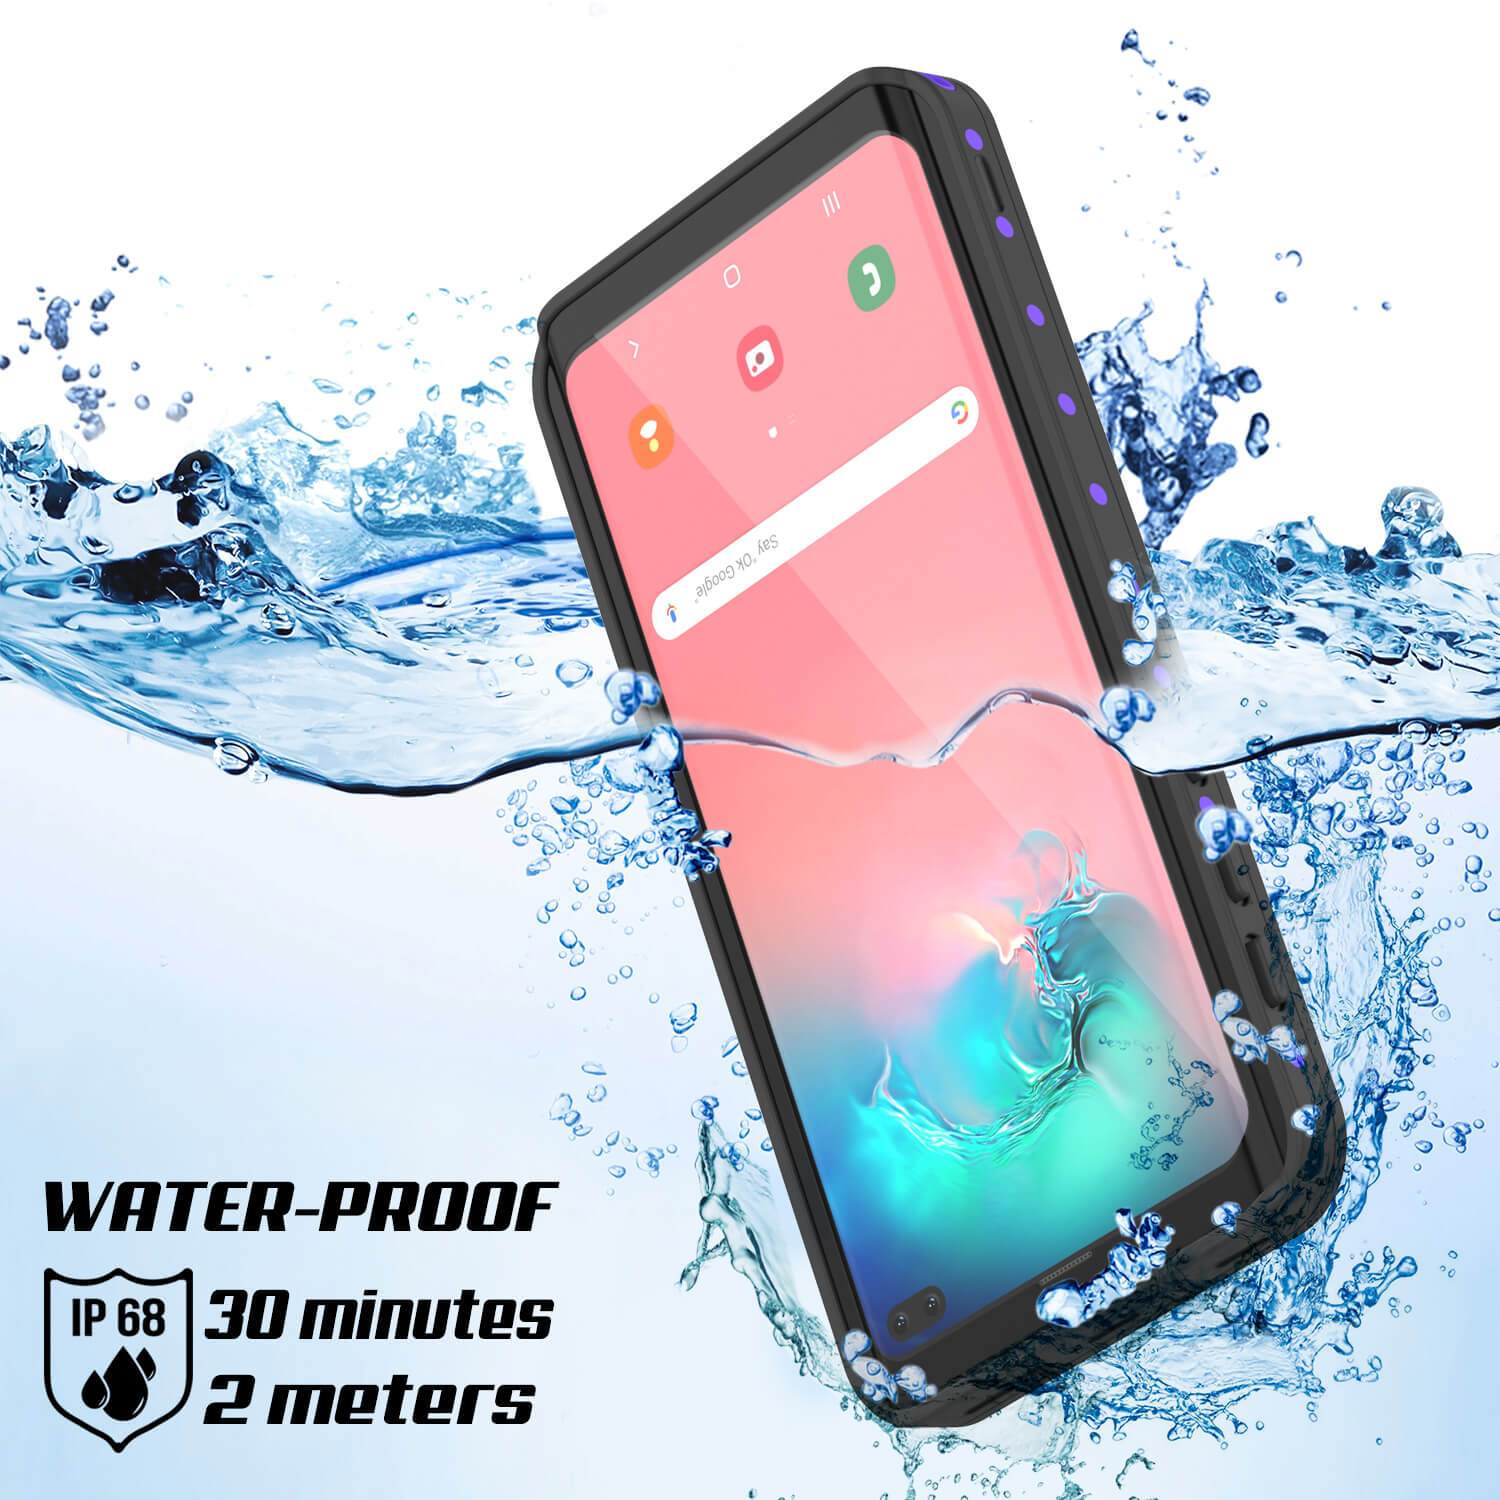 Galaxy S10e Waterproof Case PunkCase StudStar Purple Thin 6.6ft Underwater IP68 Shock/Snow Proof